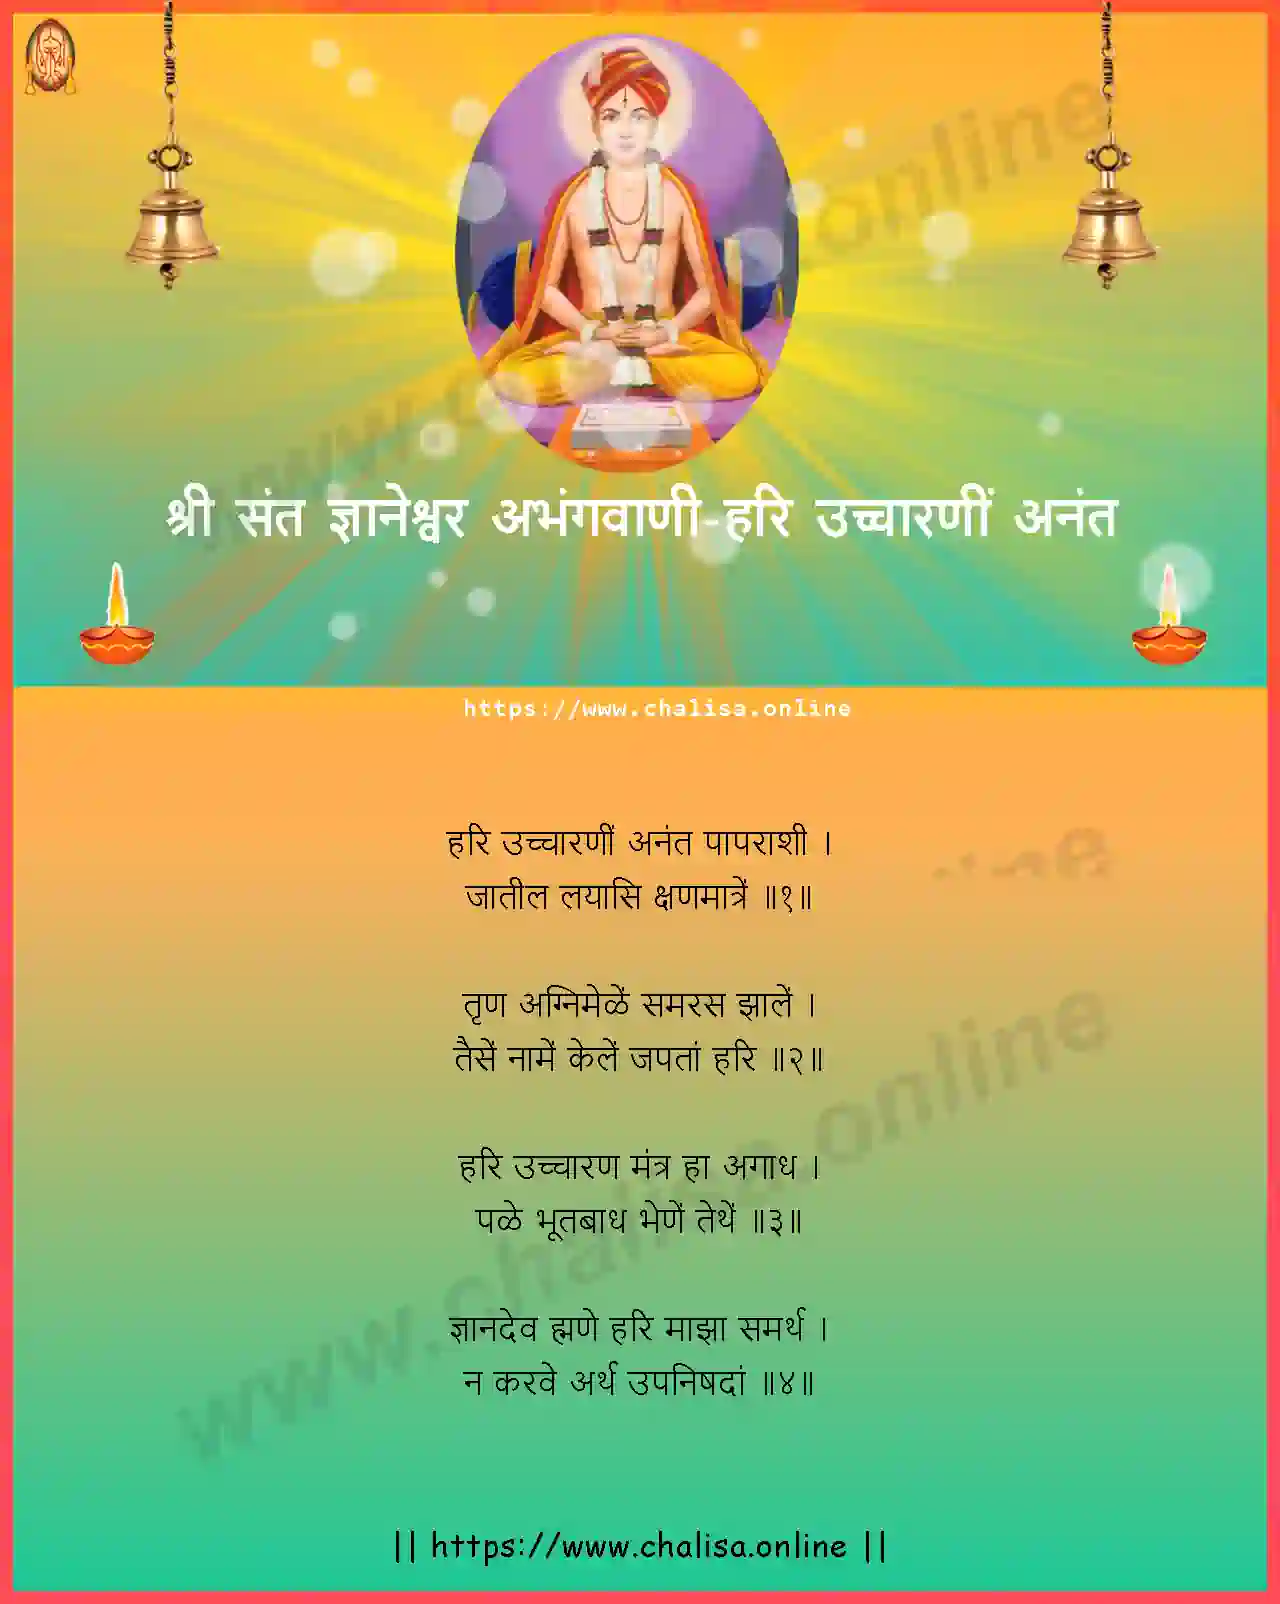 hari-ucharani-anant-shri-sant-dnyaneshwar-abhang-marathi-lyrics-download